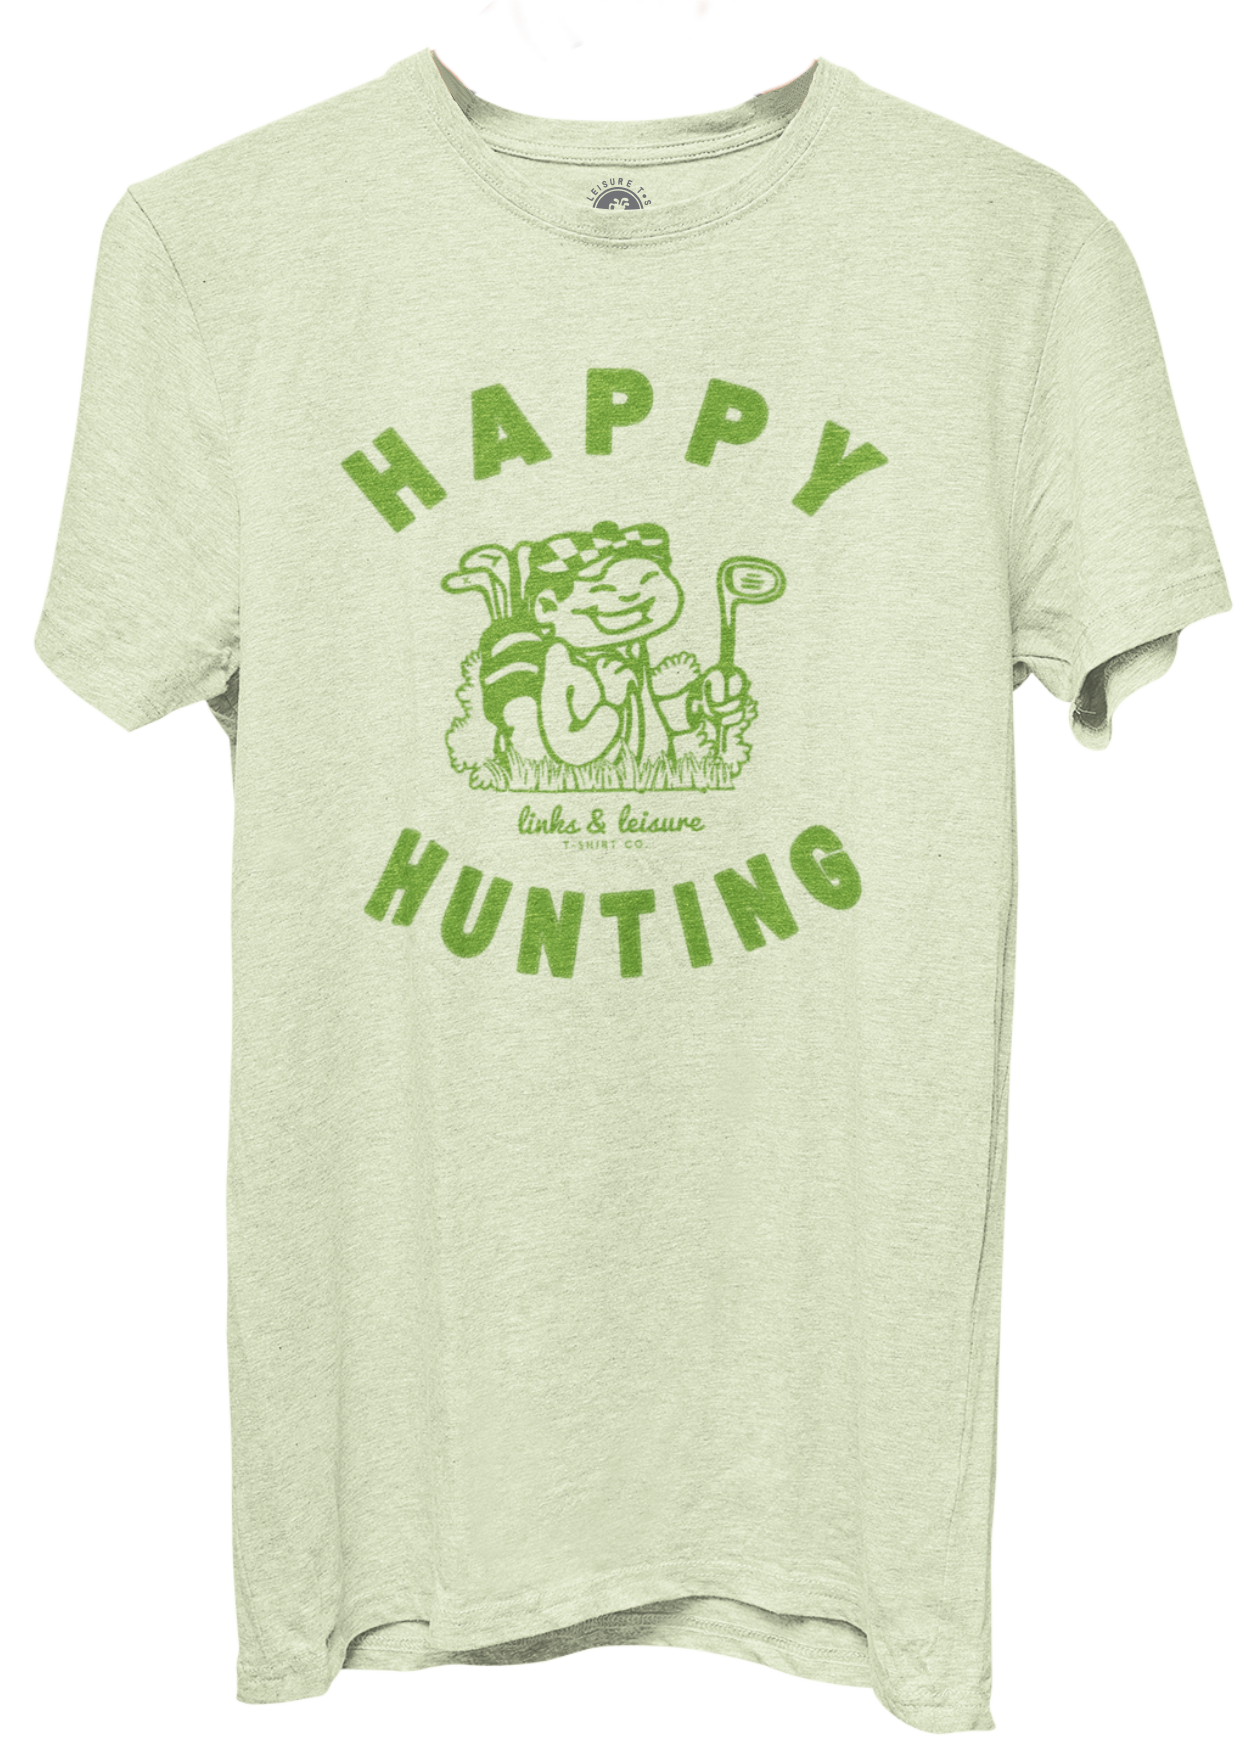 "Happy Hunting"